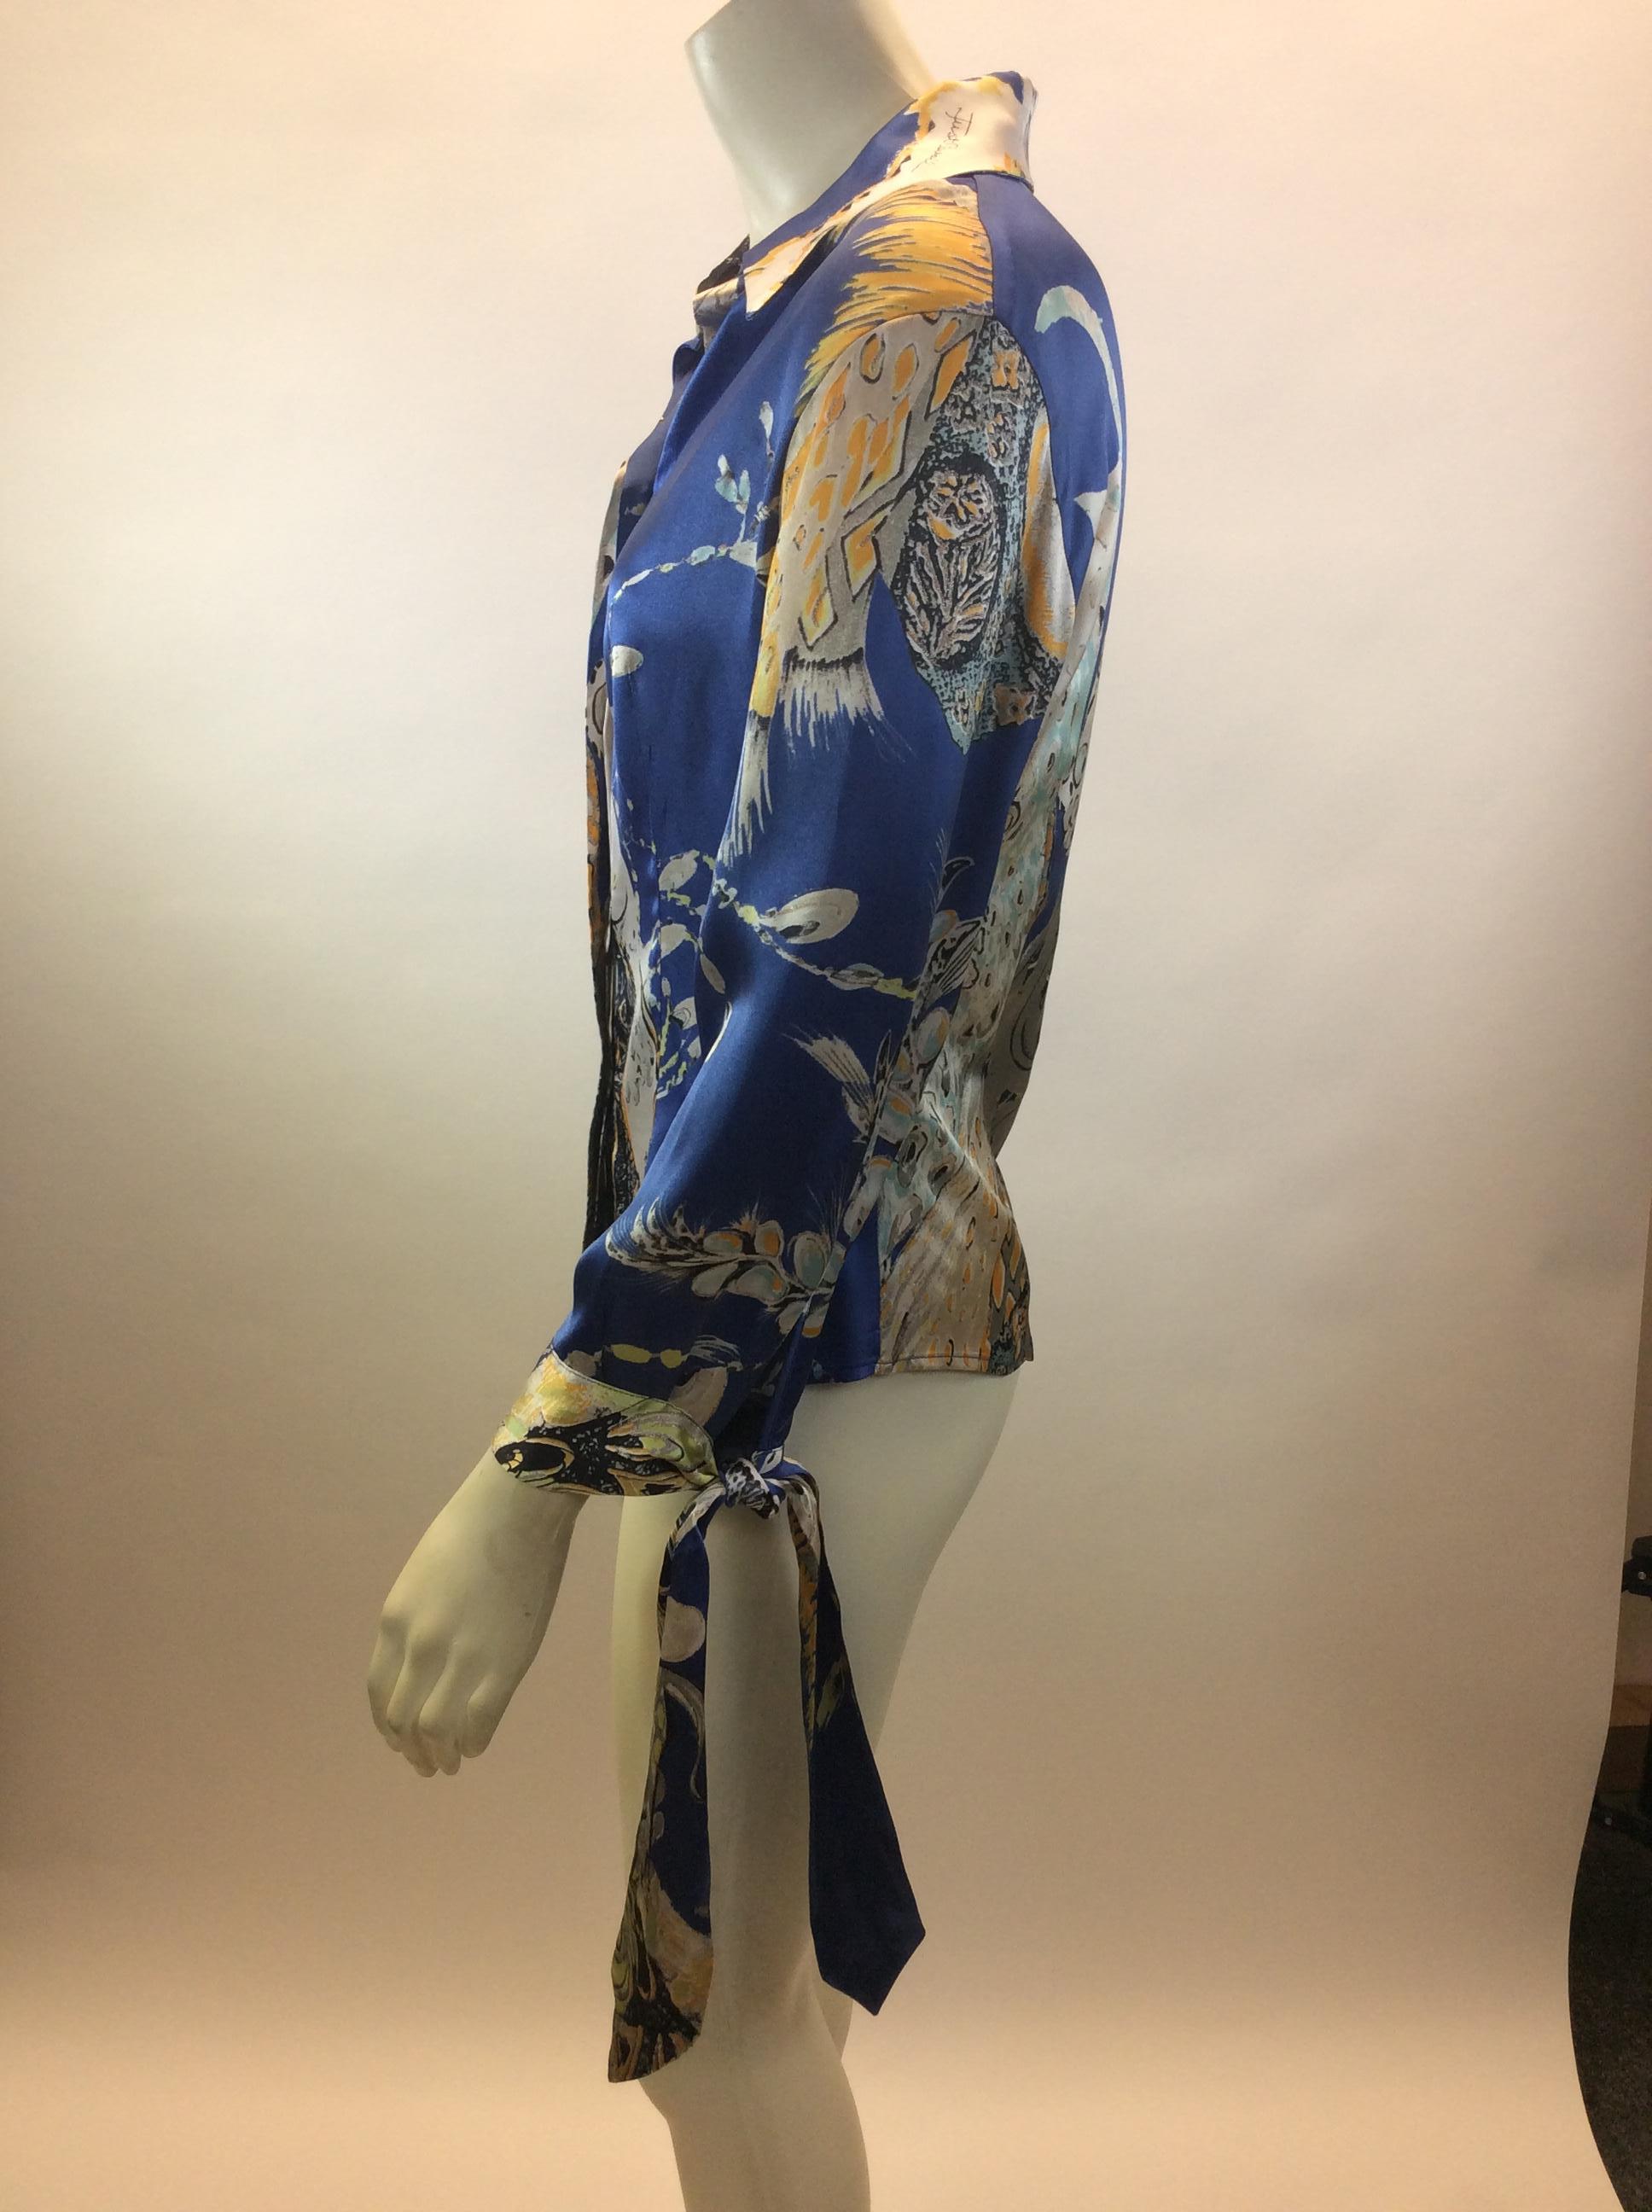 Roberto Cavalli Blue Print Silk Blouse
$199
Made in Italy
93% Silk, 7% Elastane
Size 42
Length 22.5